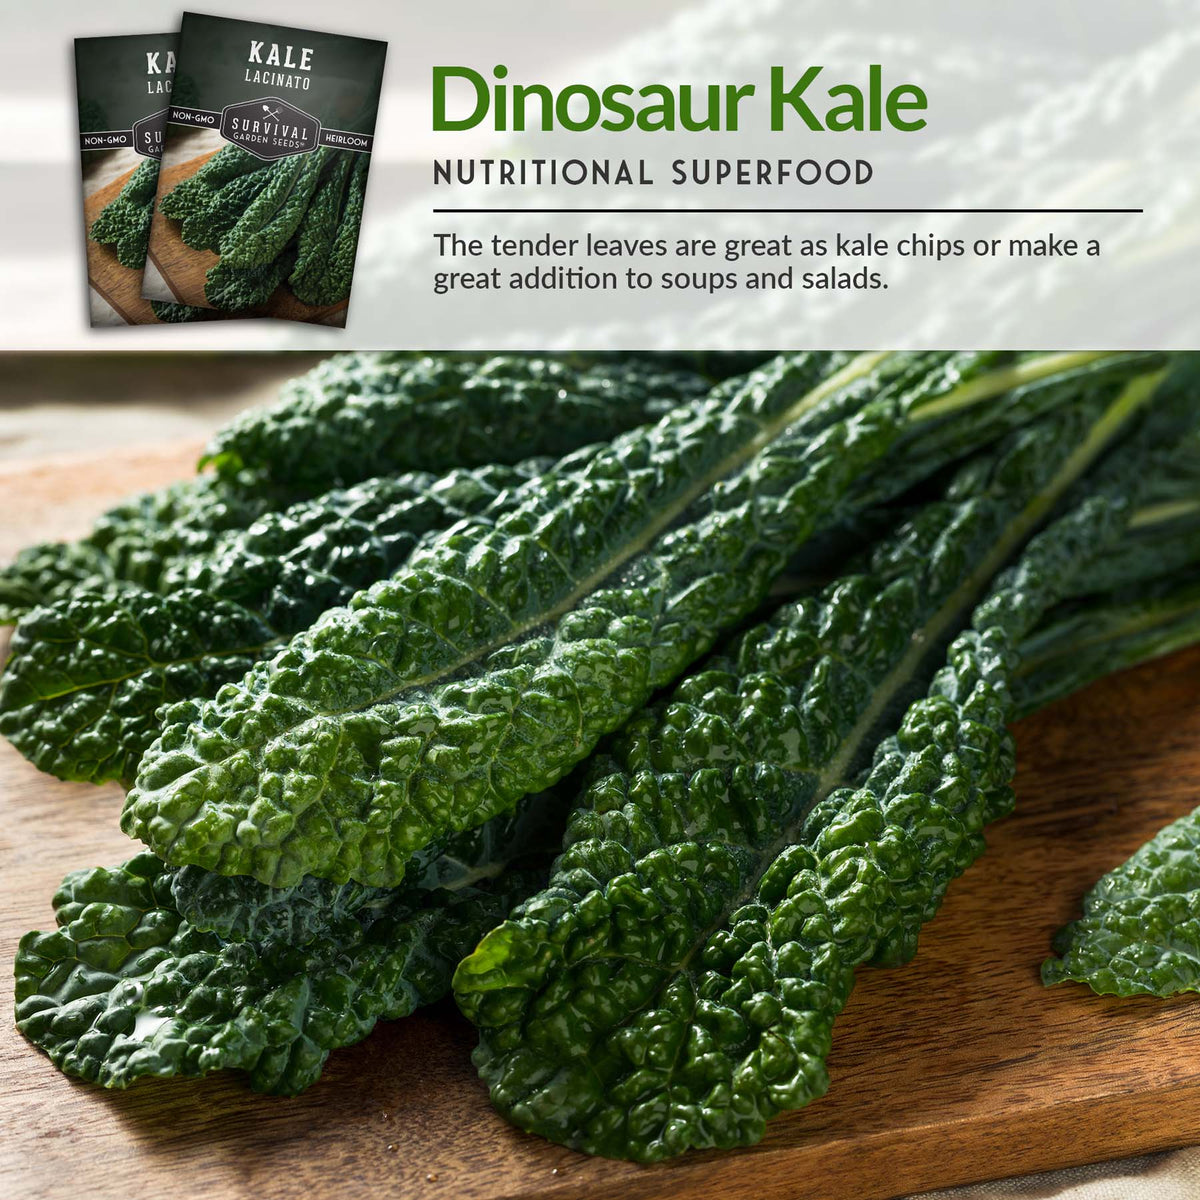 Dinosaur kale is a nutritional superfood